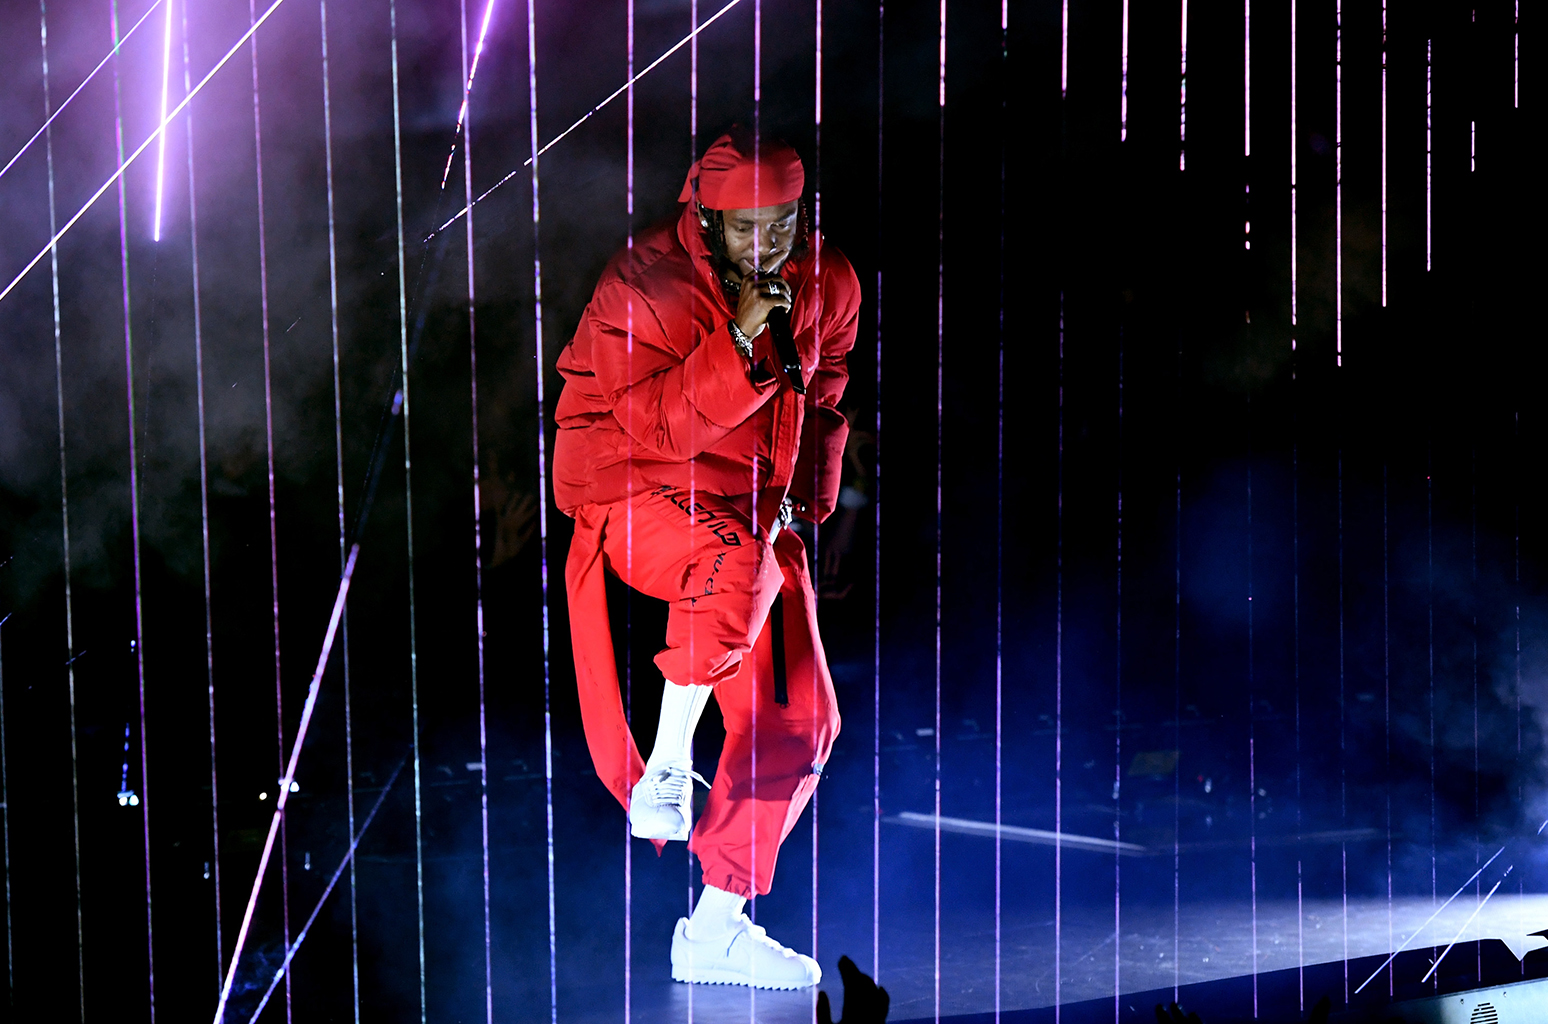 Kendrick Lamar - 'DNA.' & 'HUMBLE.' (2017 MTV VMAs Performance)